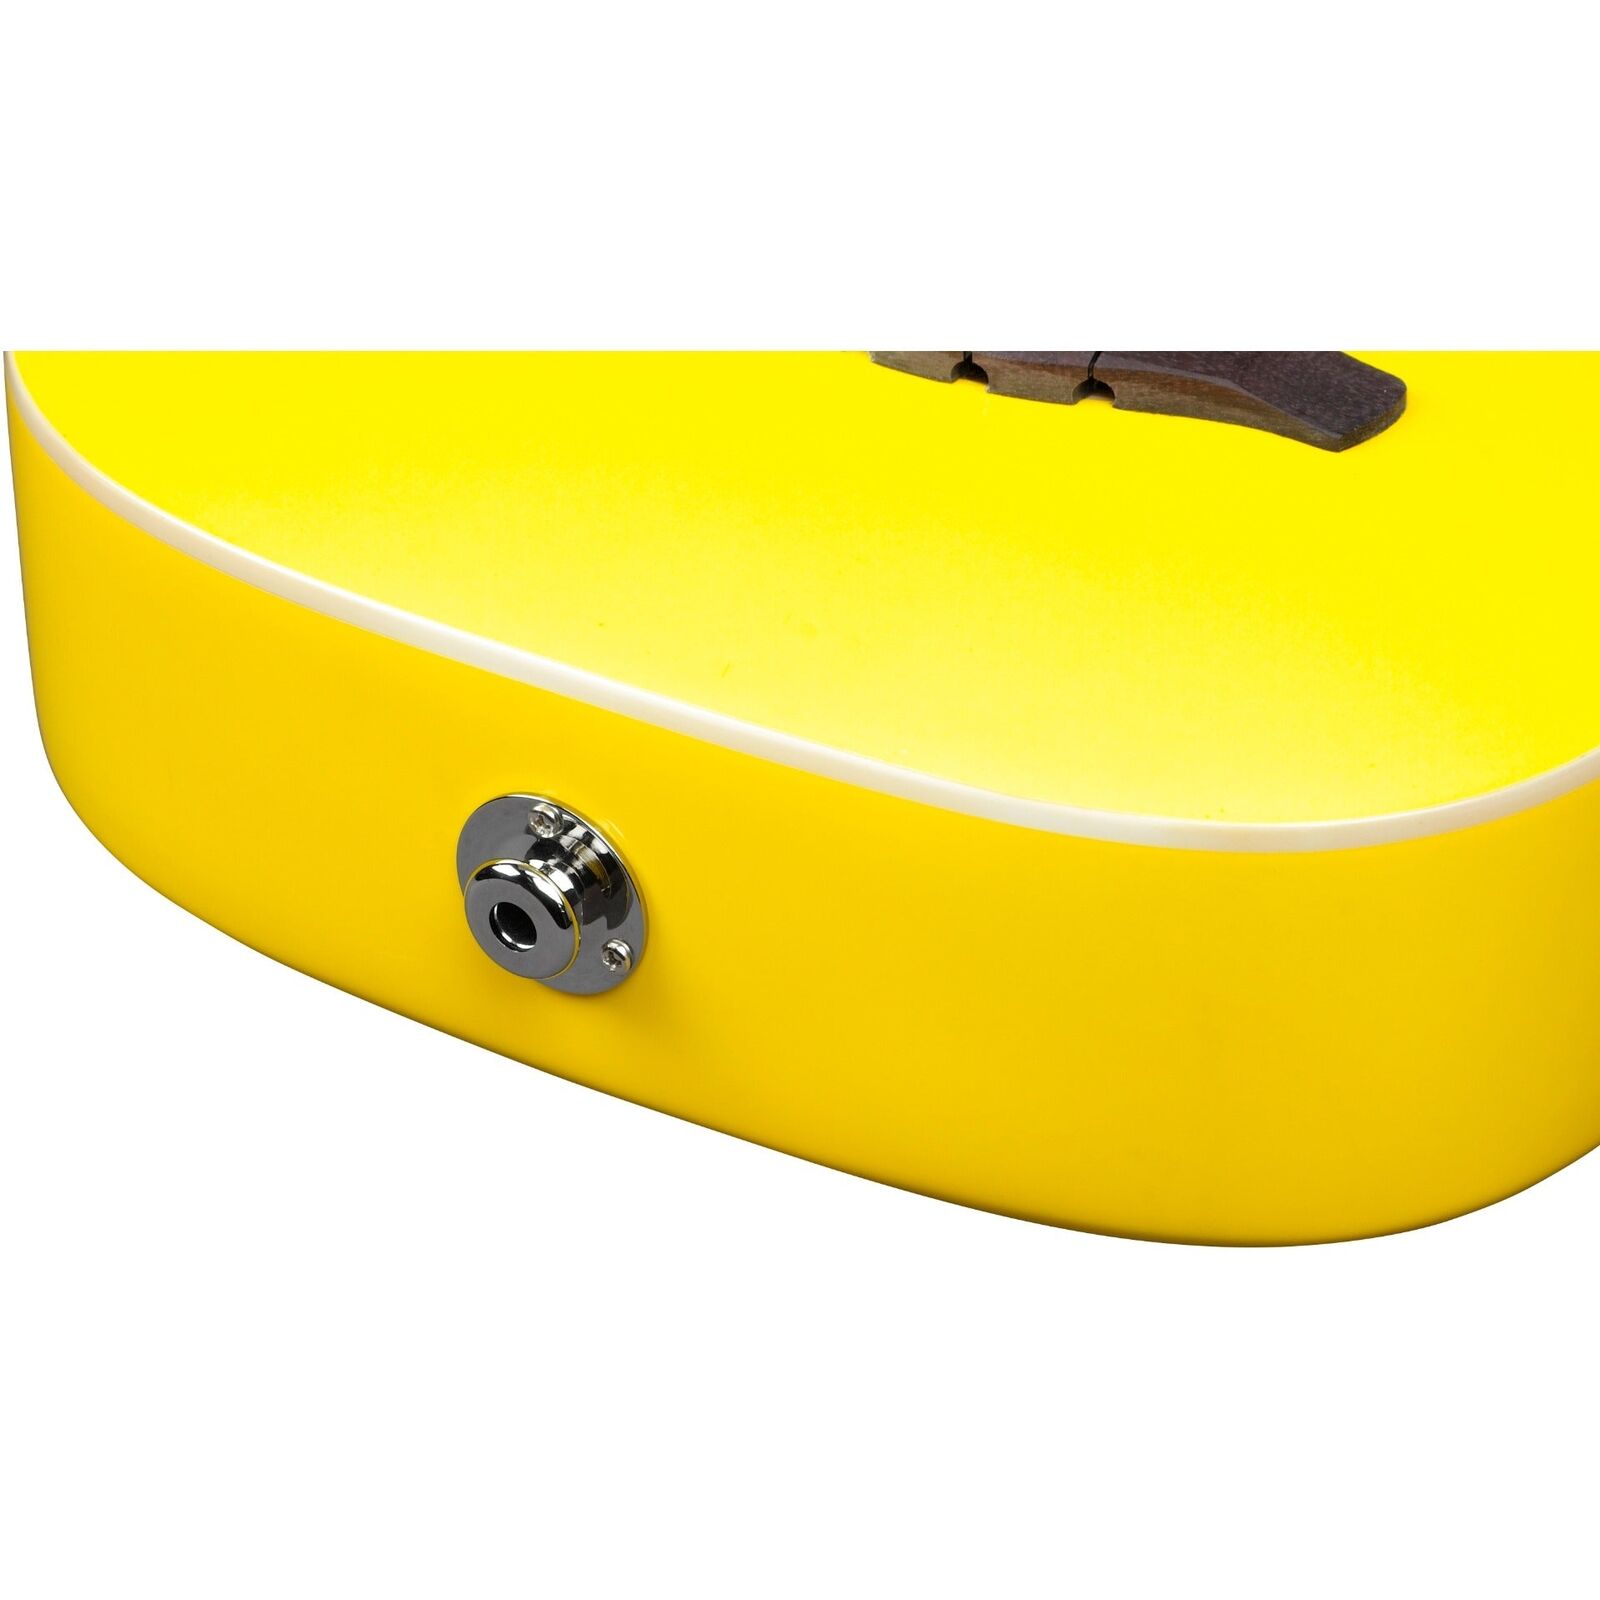 Ibanez URGT100 Electric Tenor Ukulele in Sun Yellow High Gloss w/ Gig Bag 10